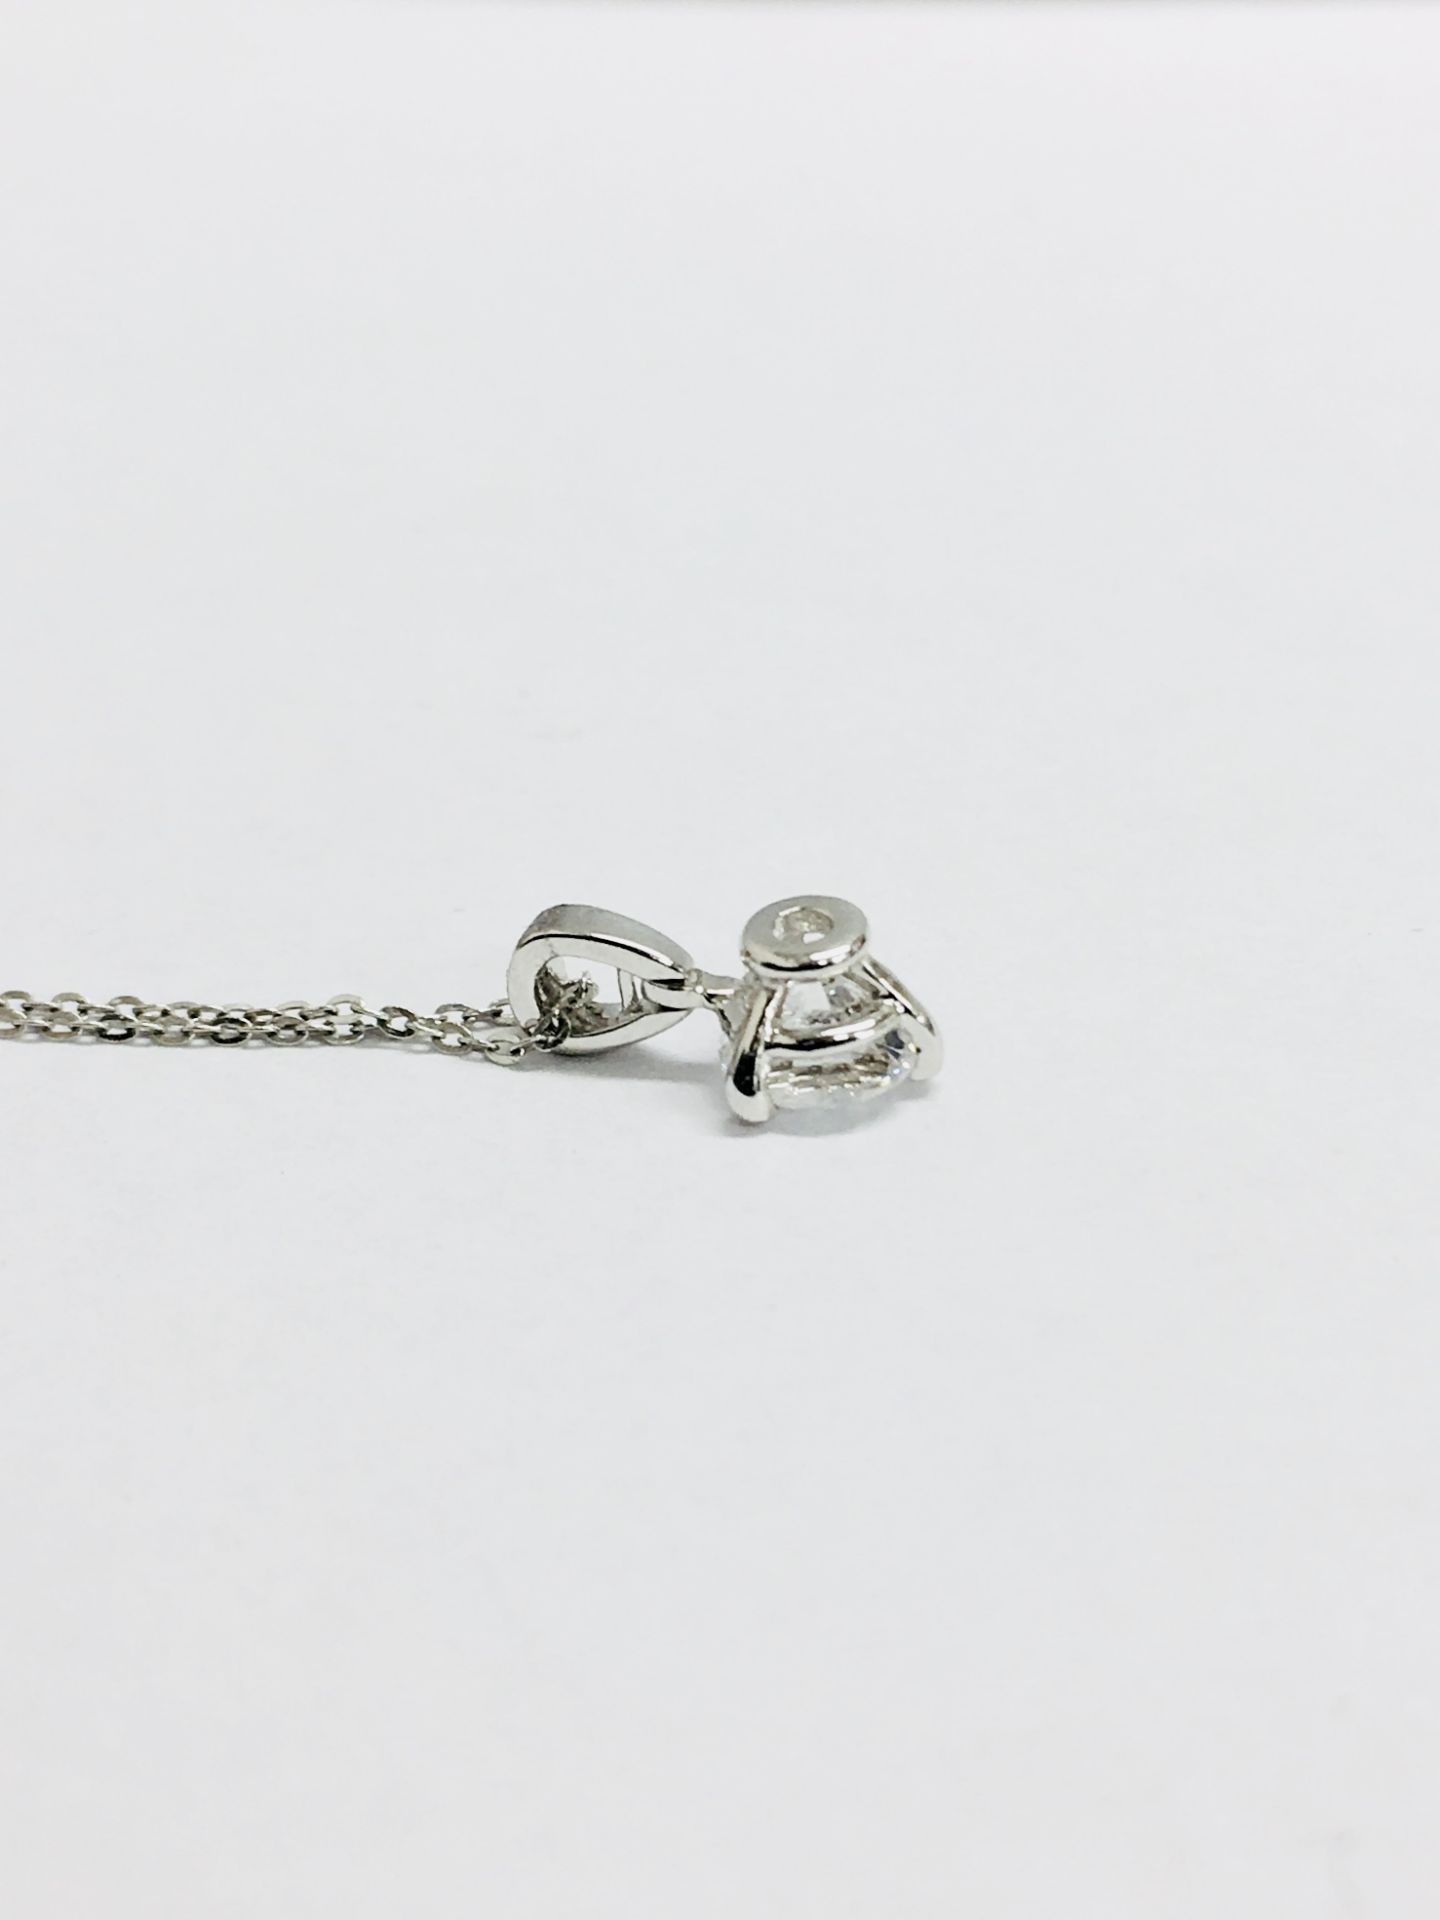 0.25ct diamond solitaire pendant set in 18ct gold. Brilliant cut diamond, I colour and si3 - Image 2 of 3